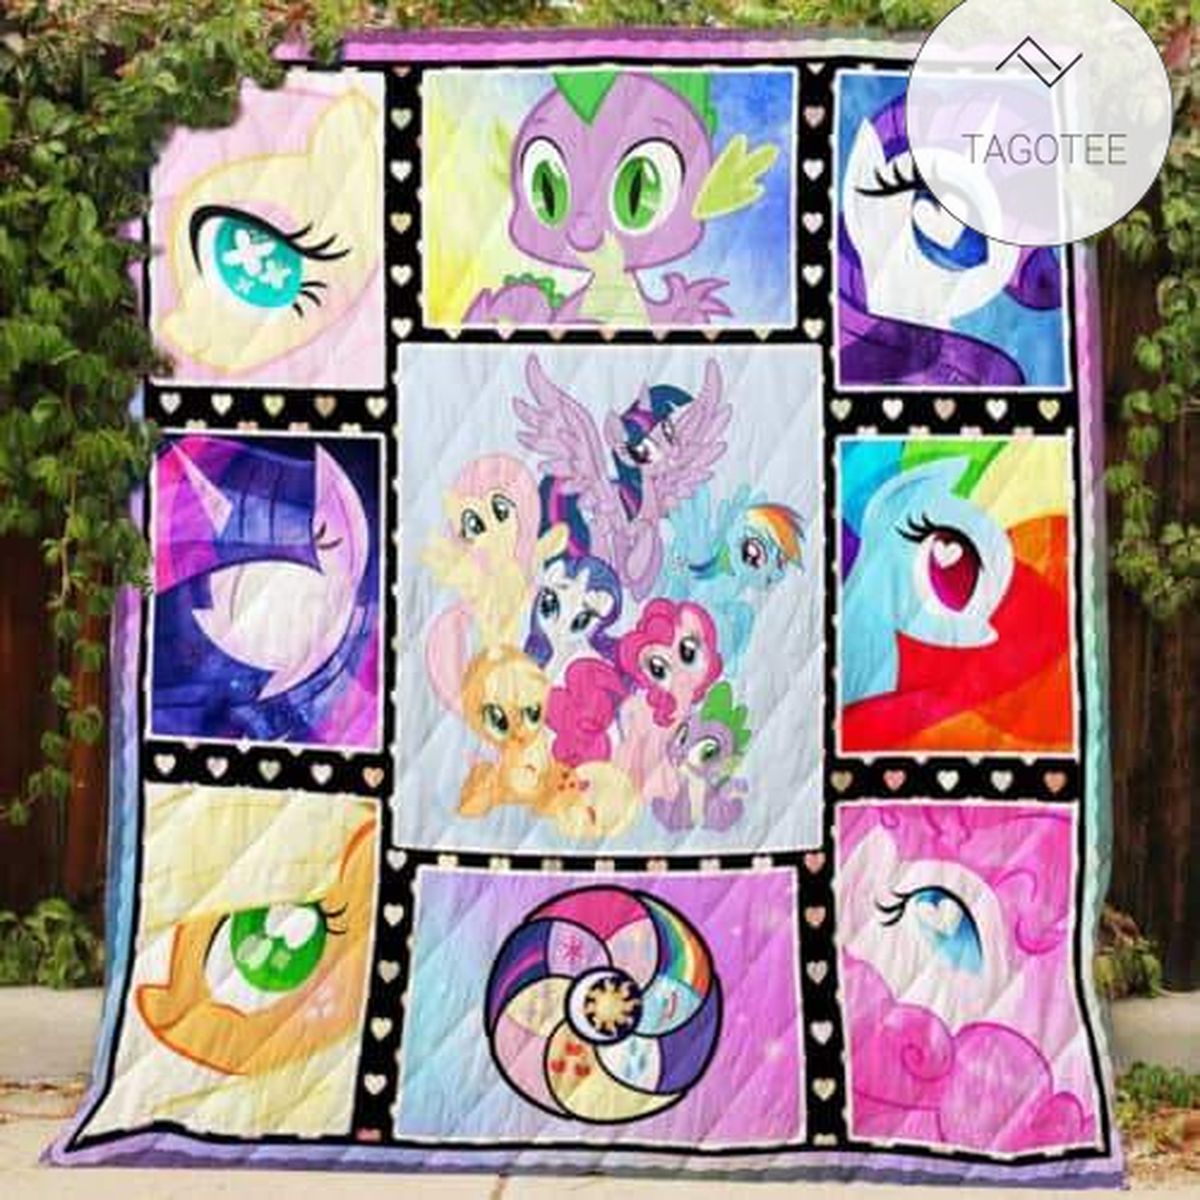 My Little Pony Quilt Blanket